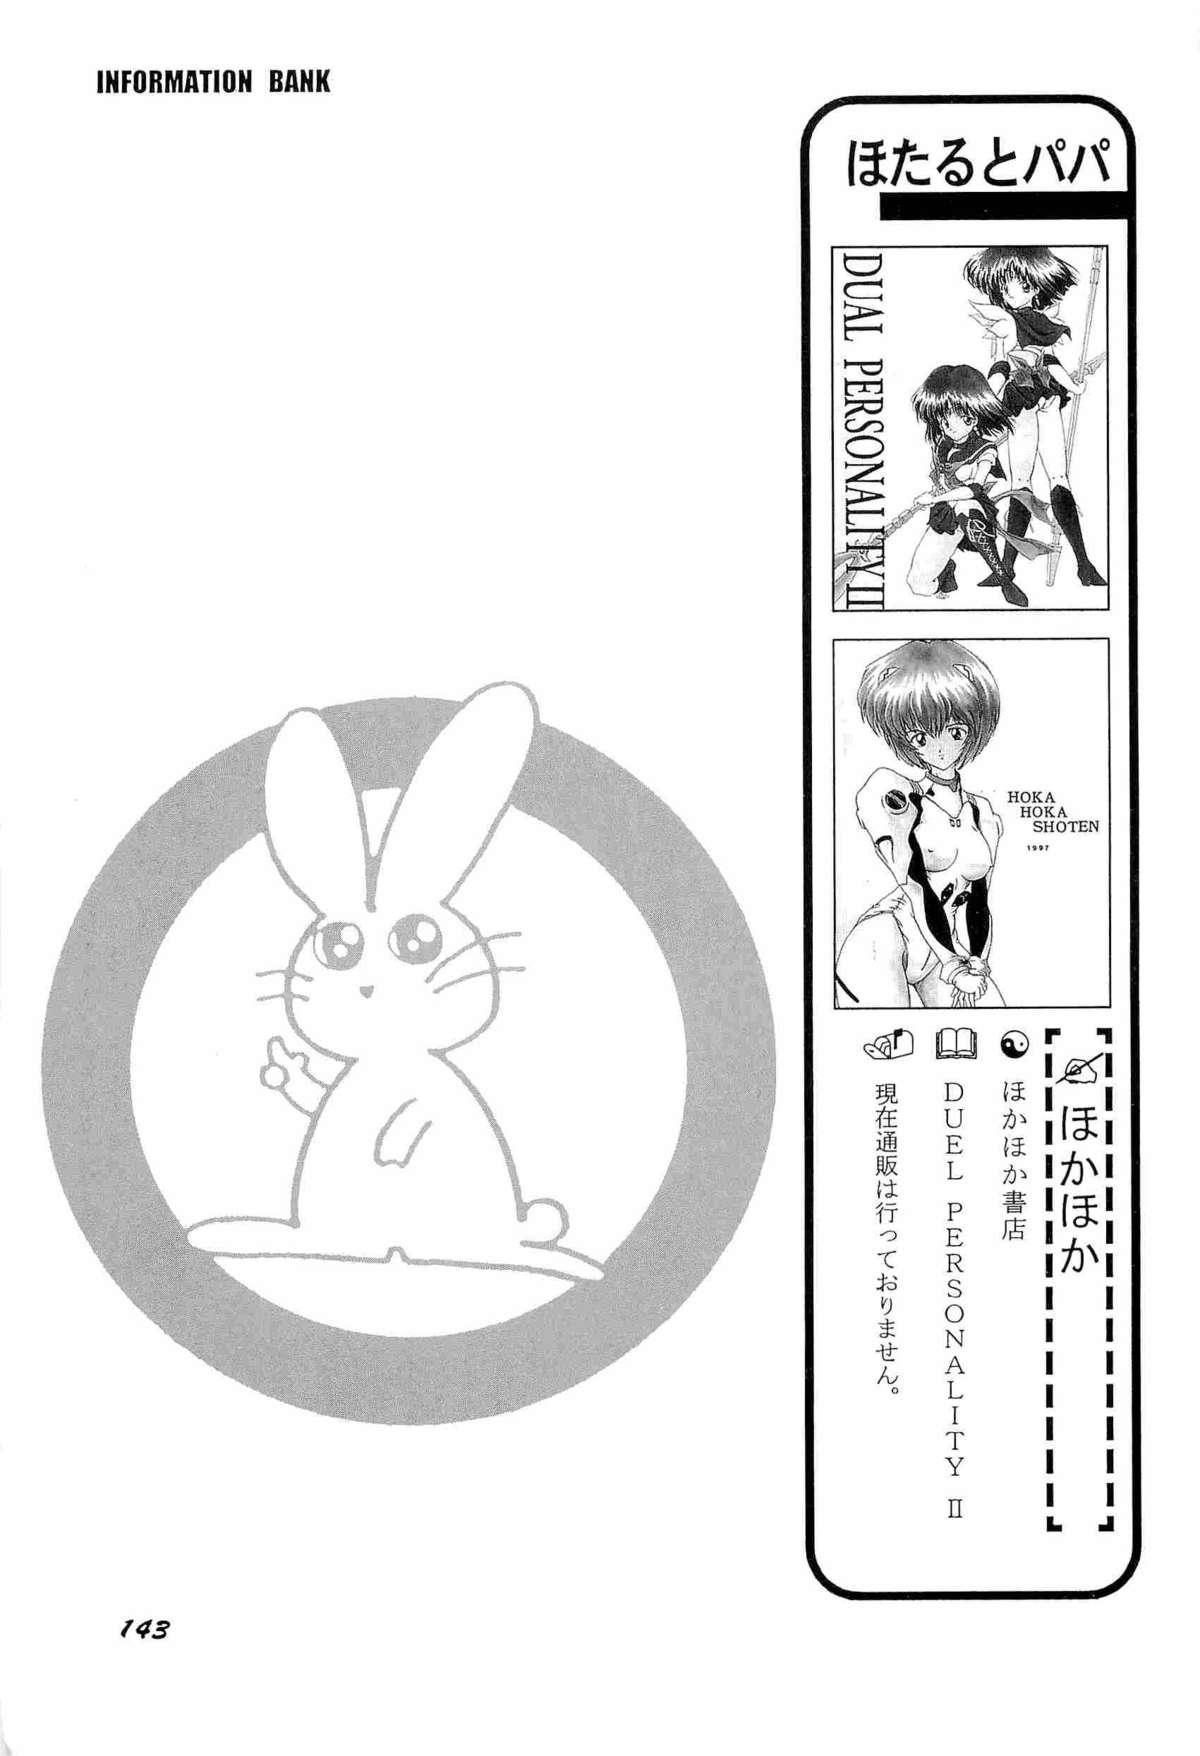 Plump Aniparo Miki 9 - Neon genesis evangelion Sailor moon Slayers Saber marionette Francais - Page 146